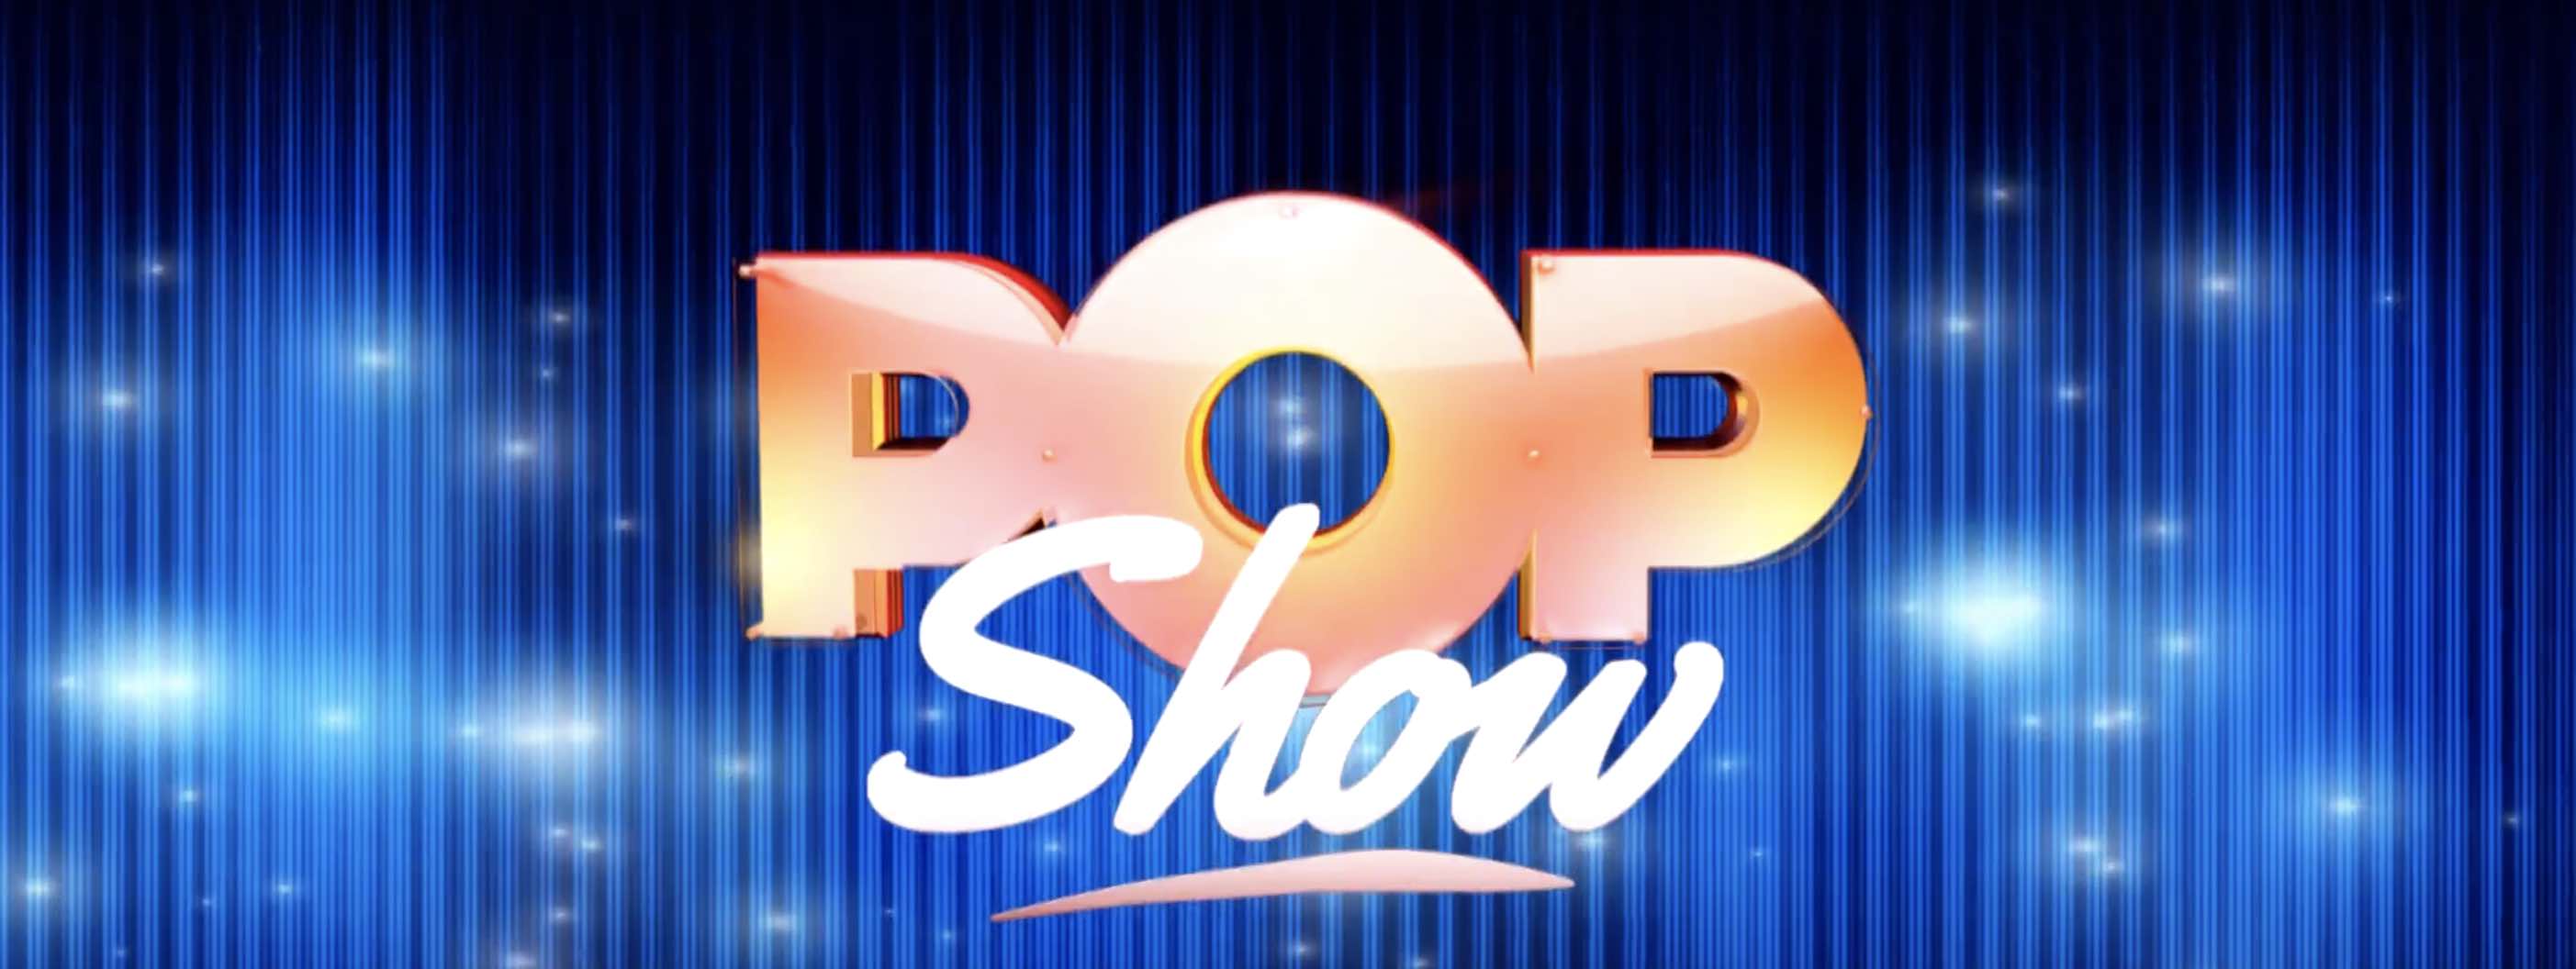 Pop Show - France 2 